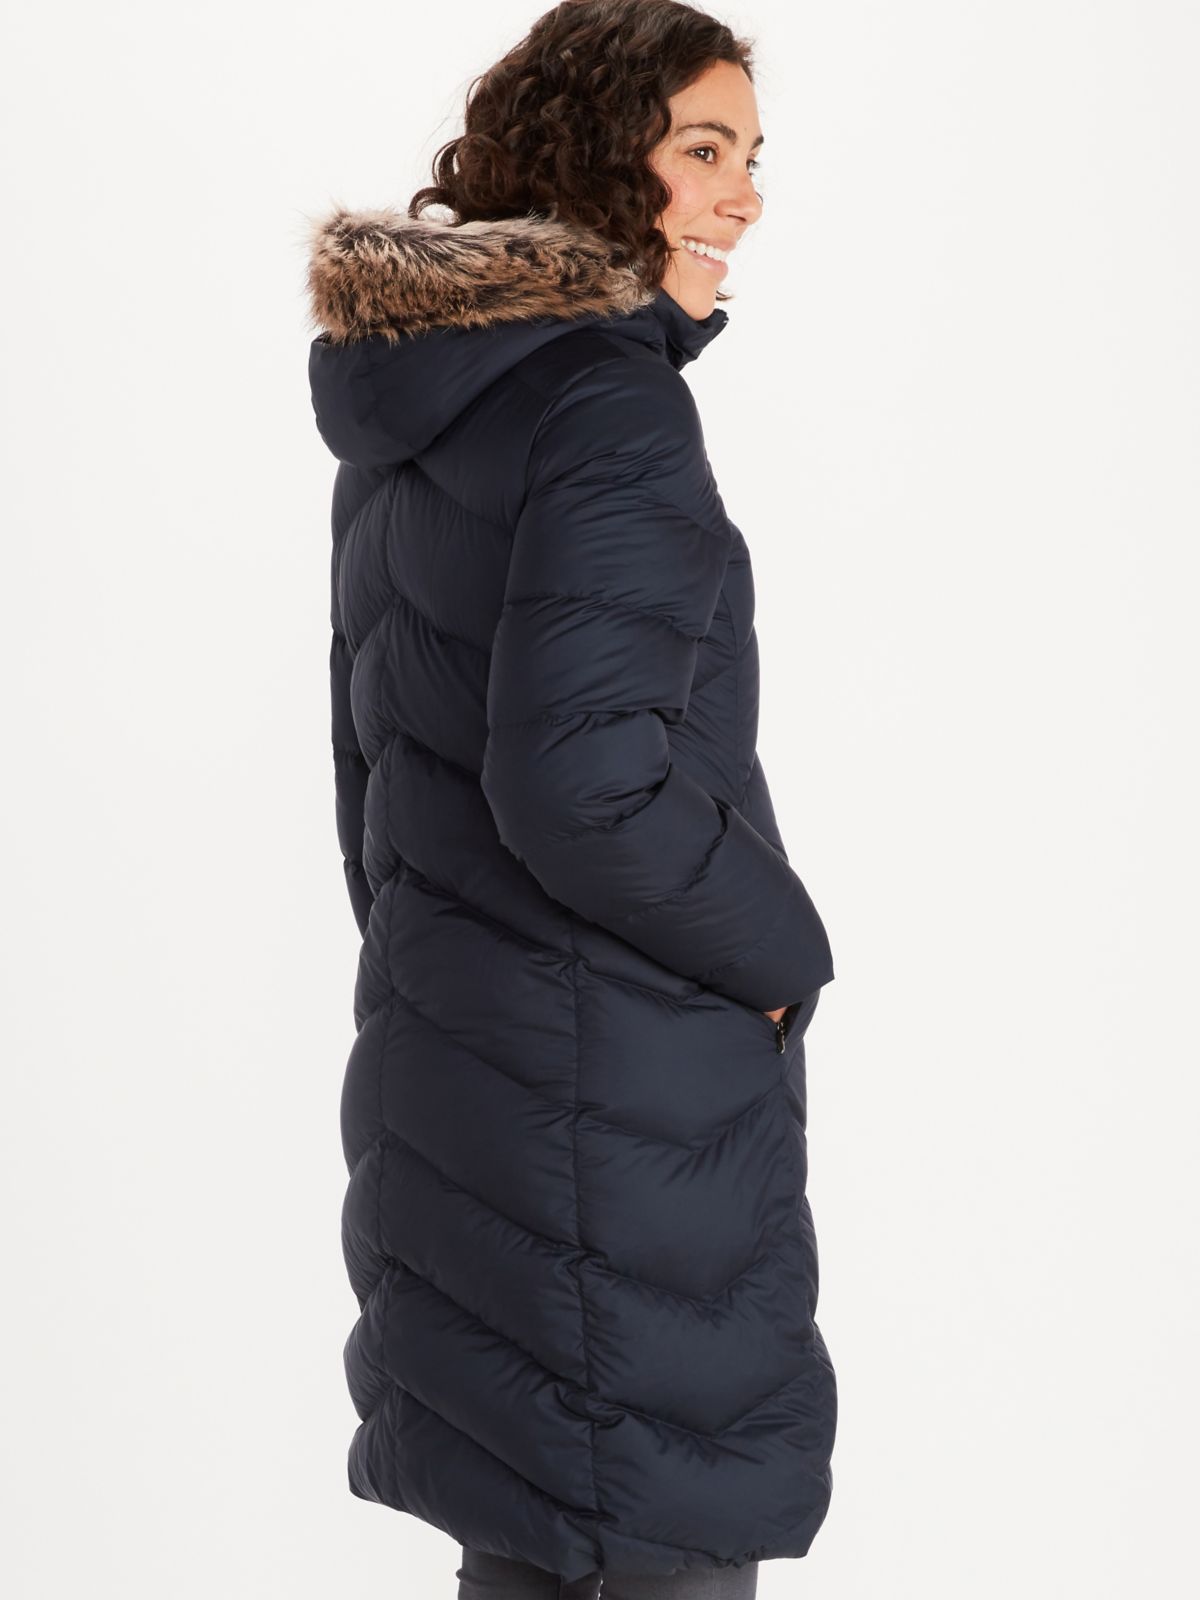 Women's Montreaux Coat | Marmot